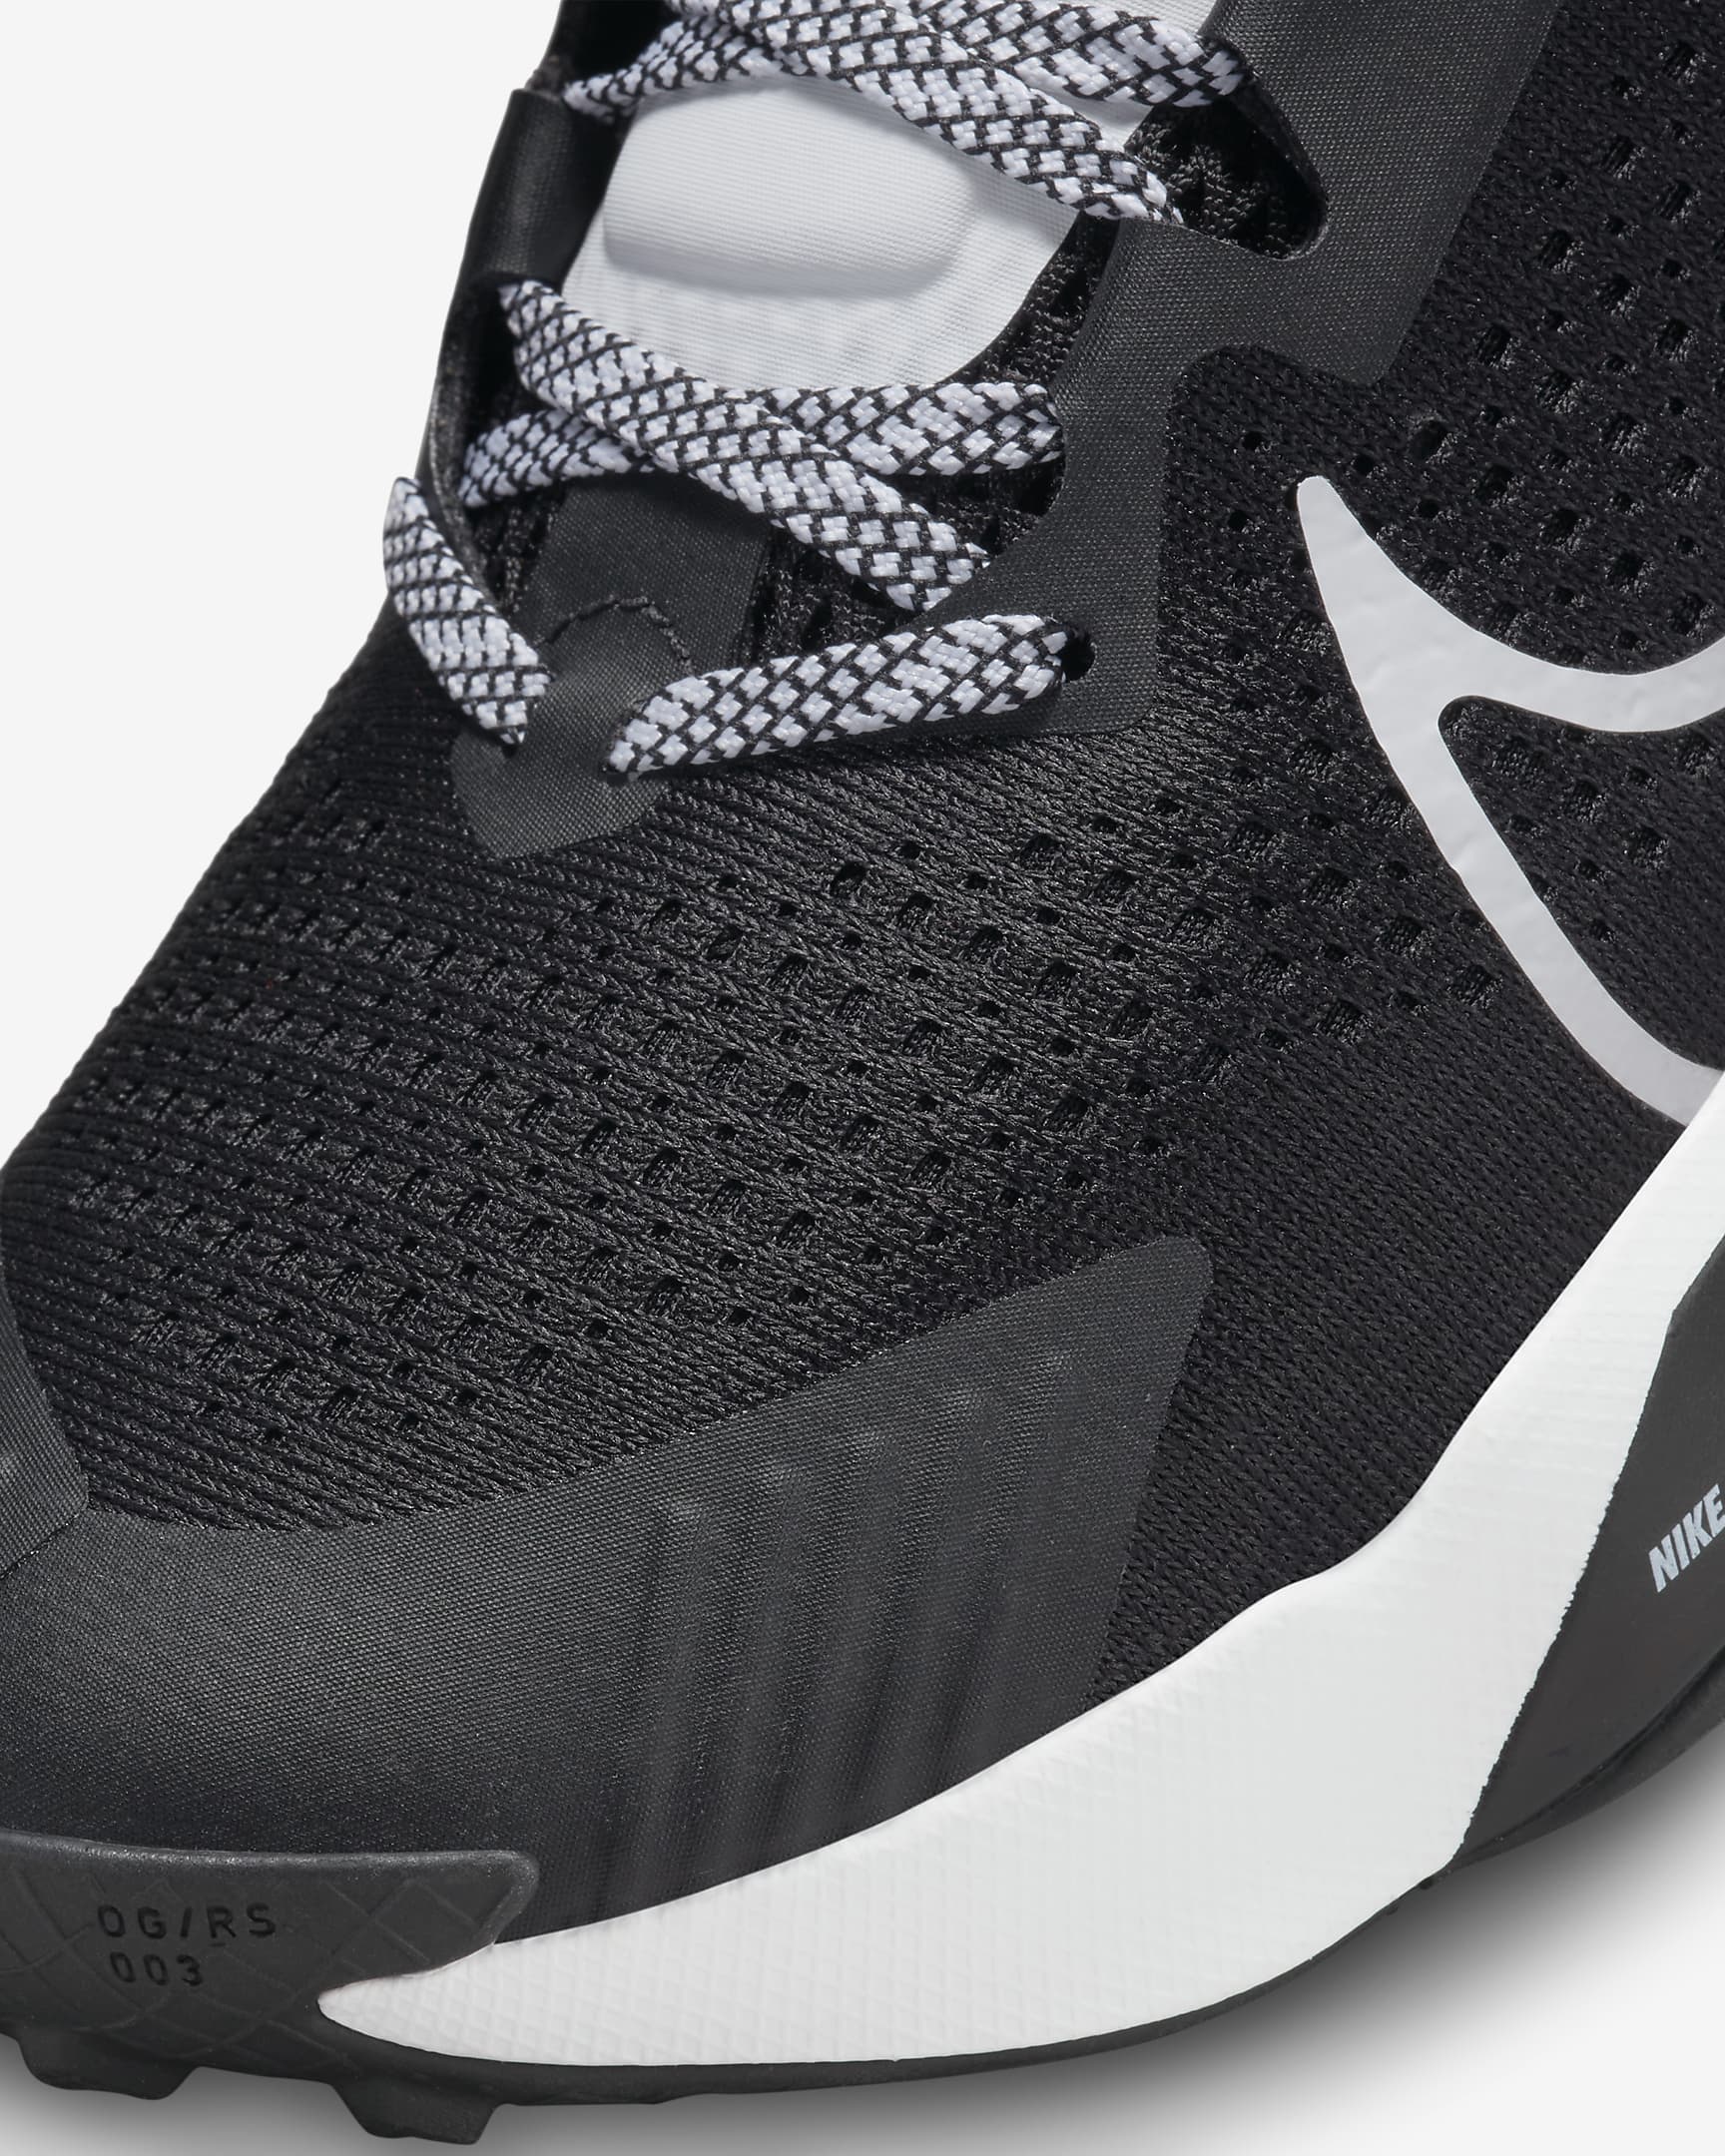 Nike Zegama Men's Trail-Running Shoes - Black/White